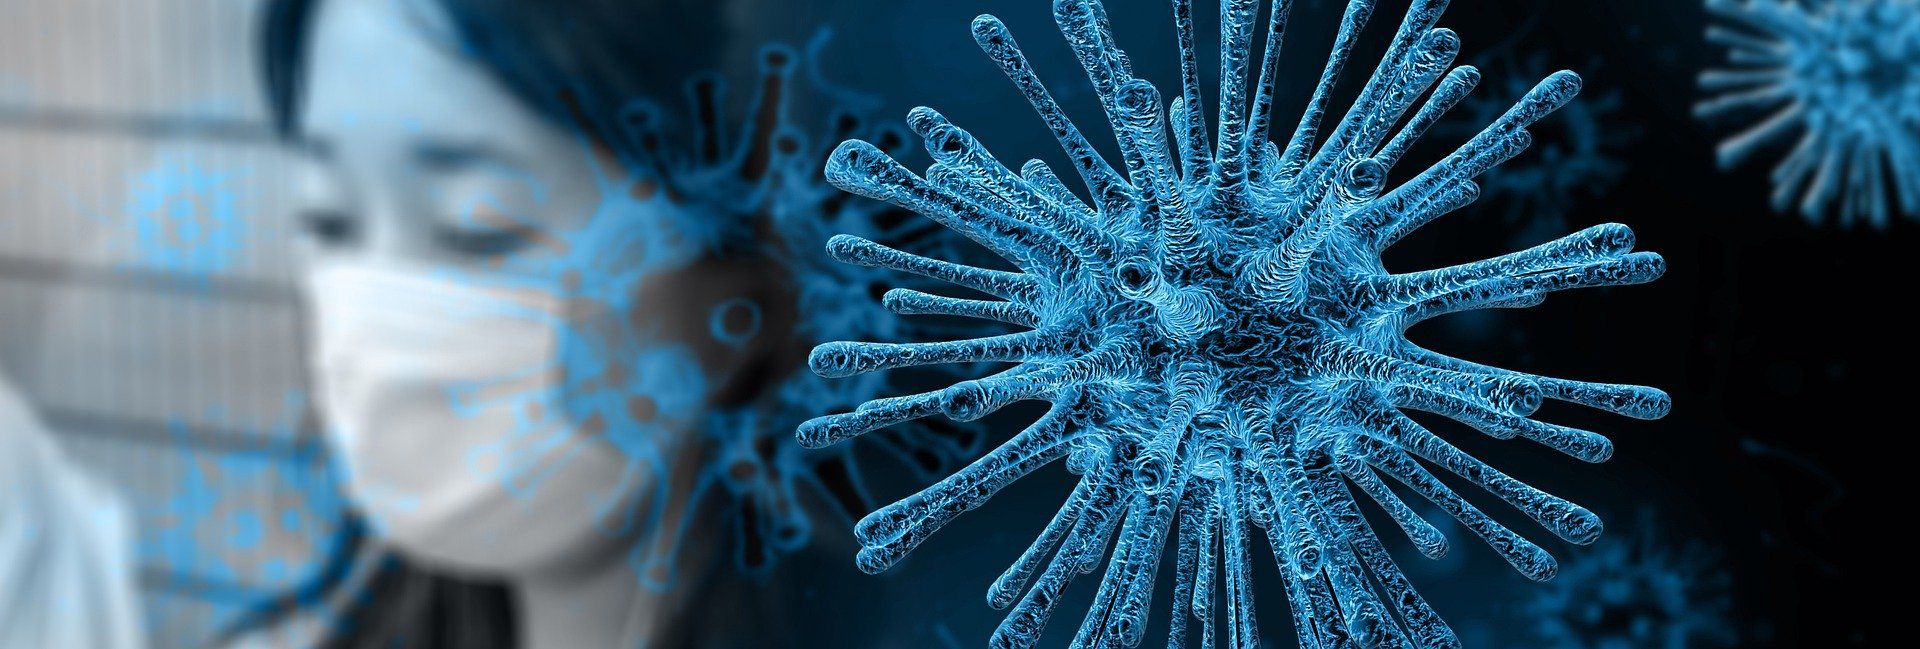 coronavirus - la tecnologia contra ataca